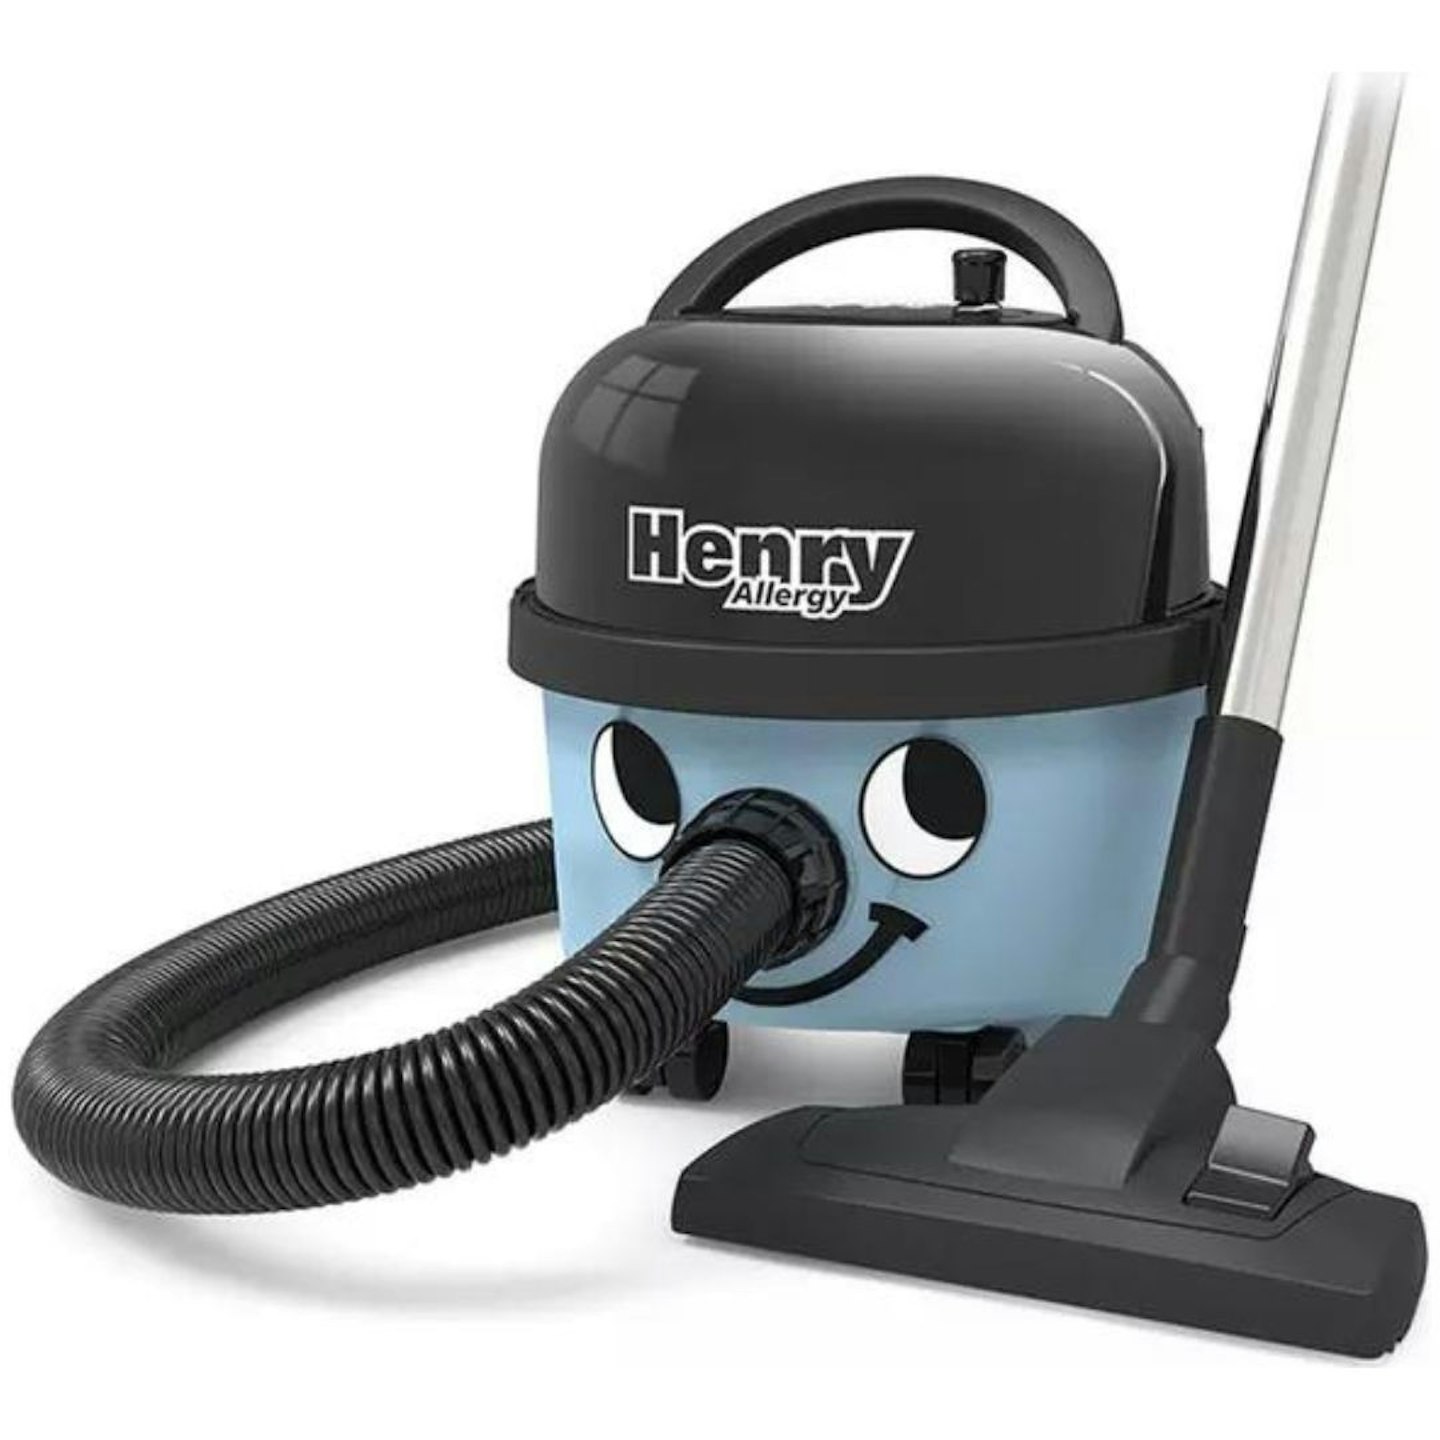 Henry Allergy Vacuum Review: Henry Allergy